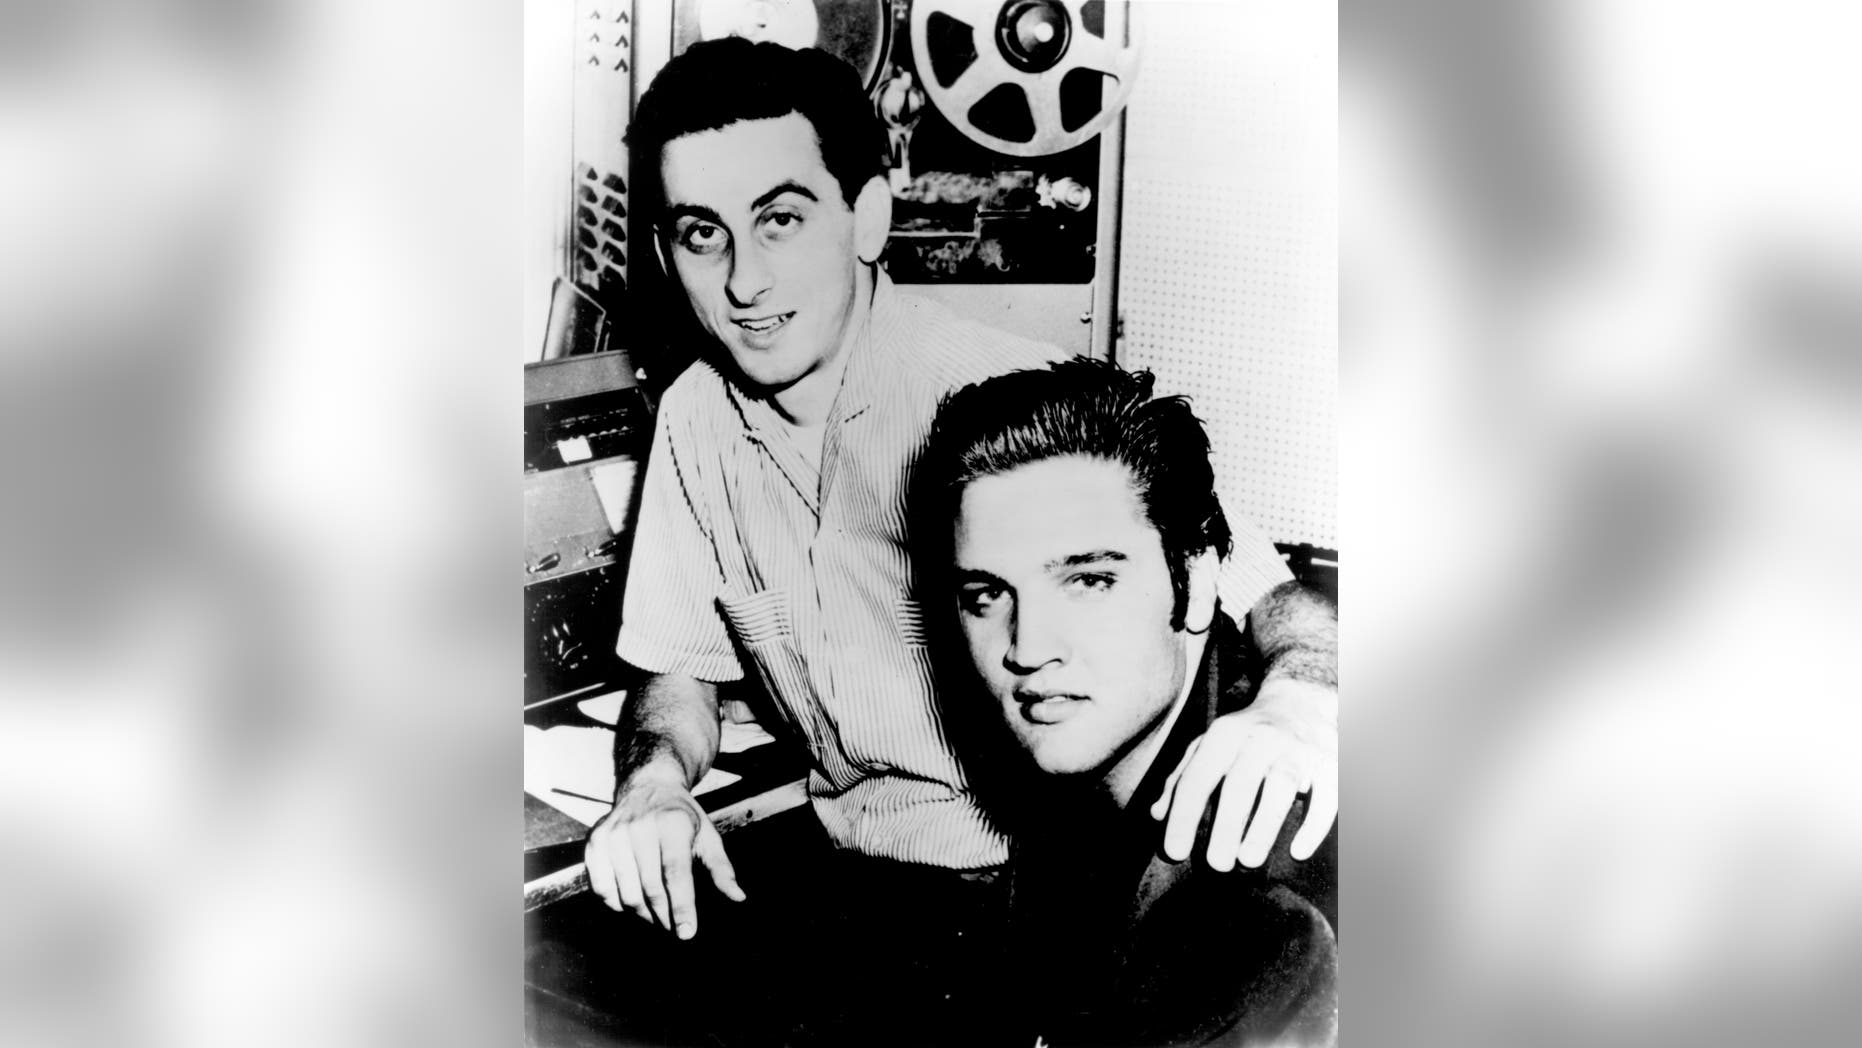 George Klein, friend of Elvis Presley and longtime radio host, dead at 83